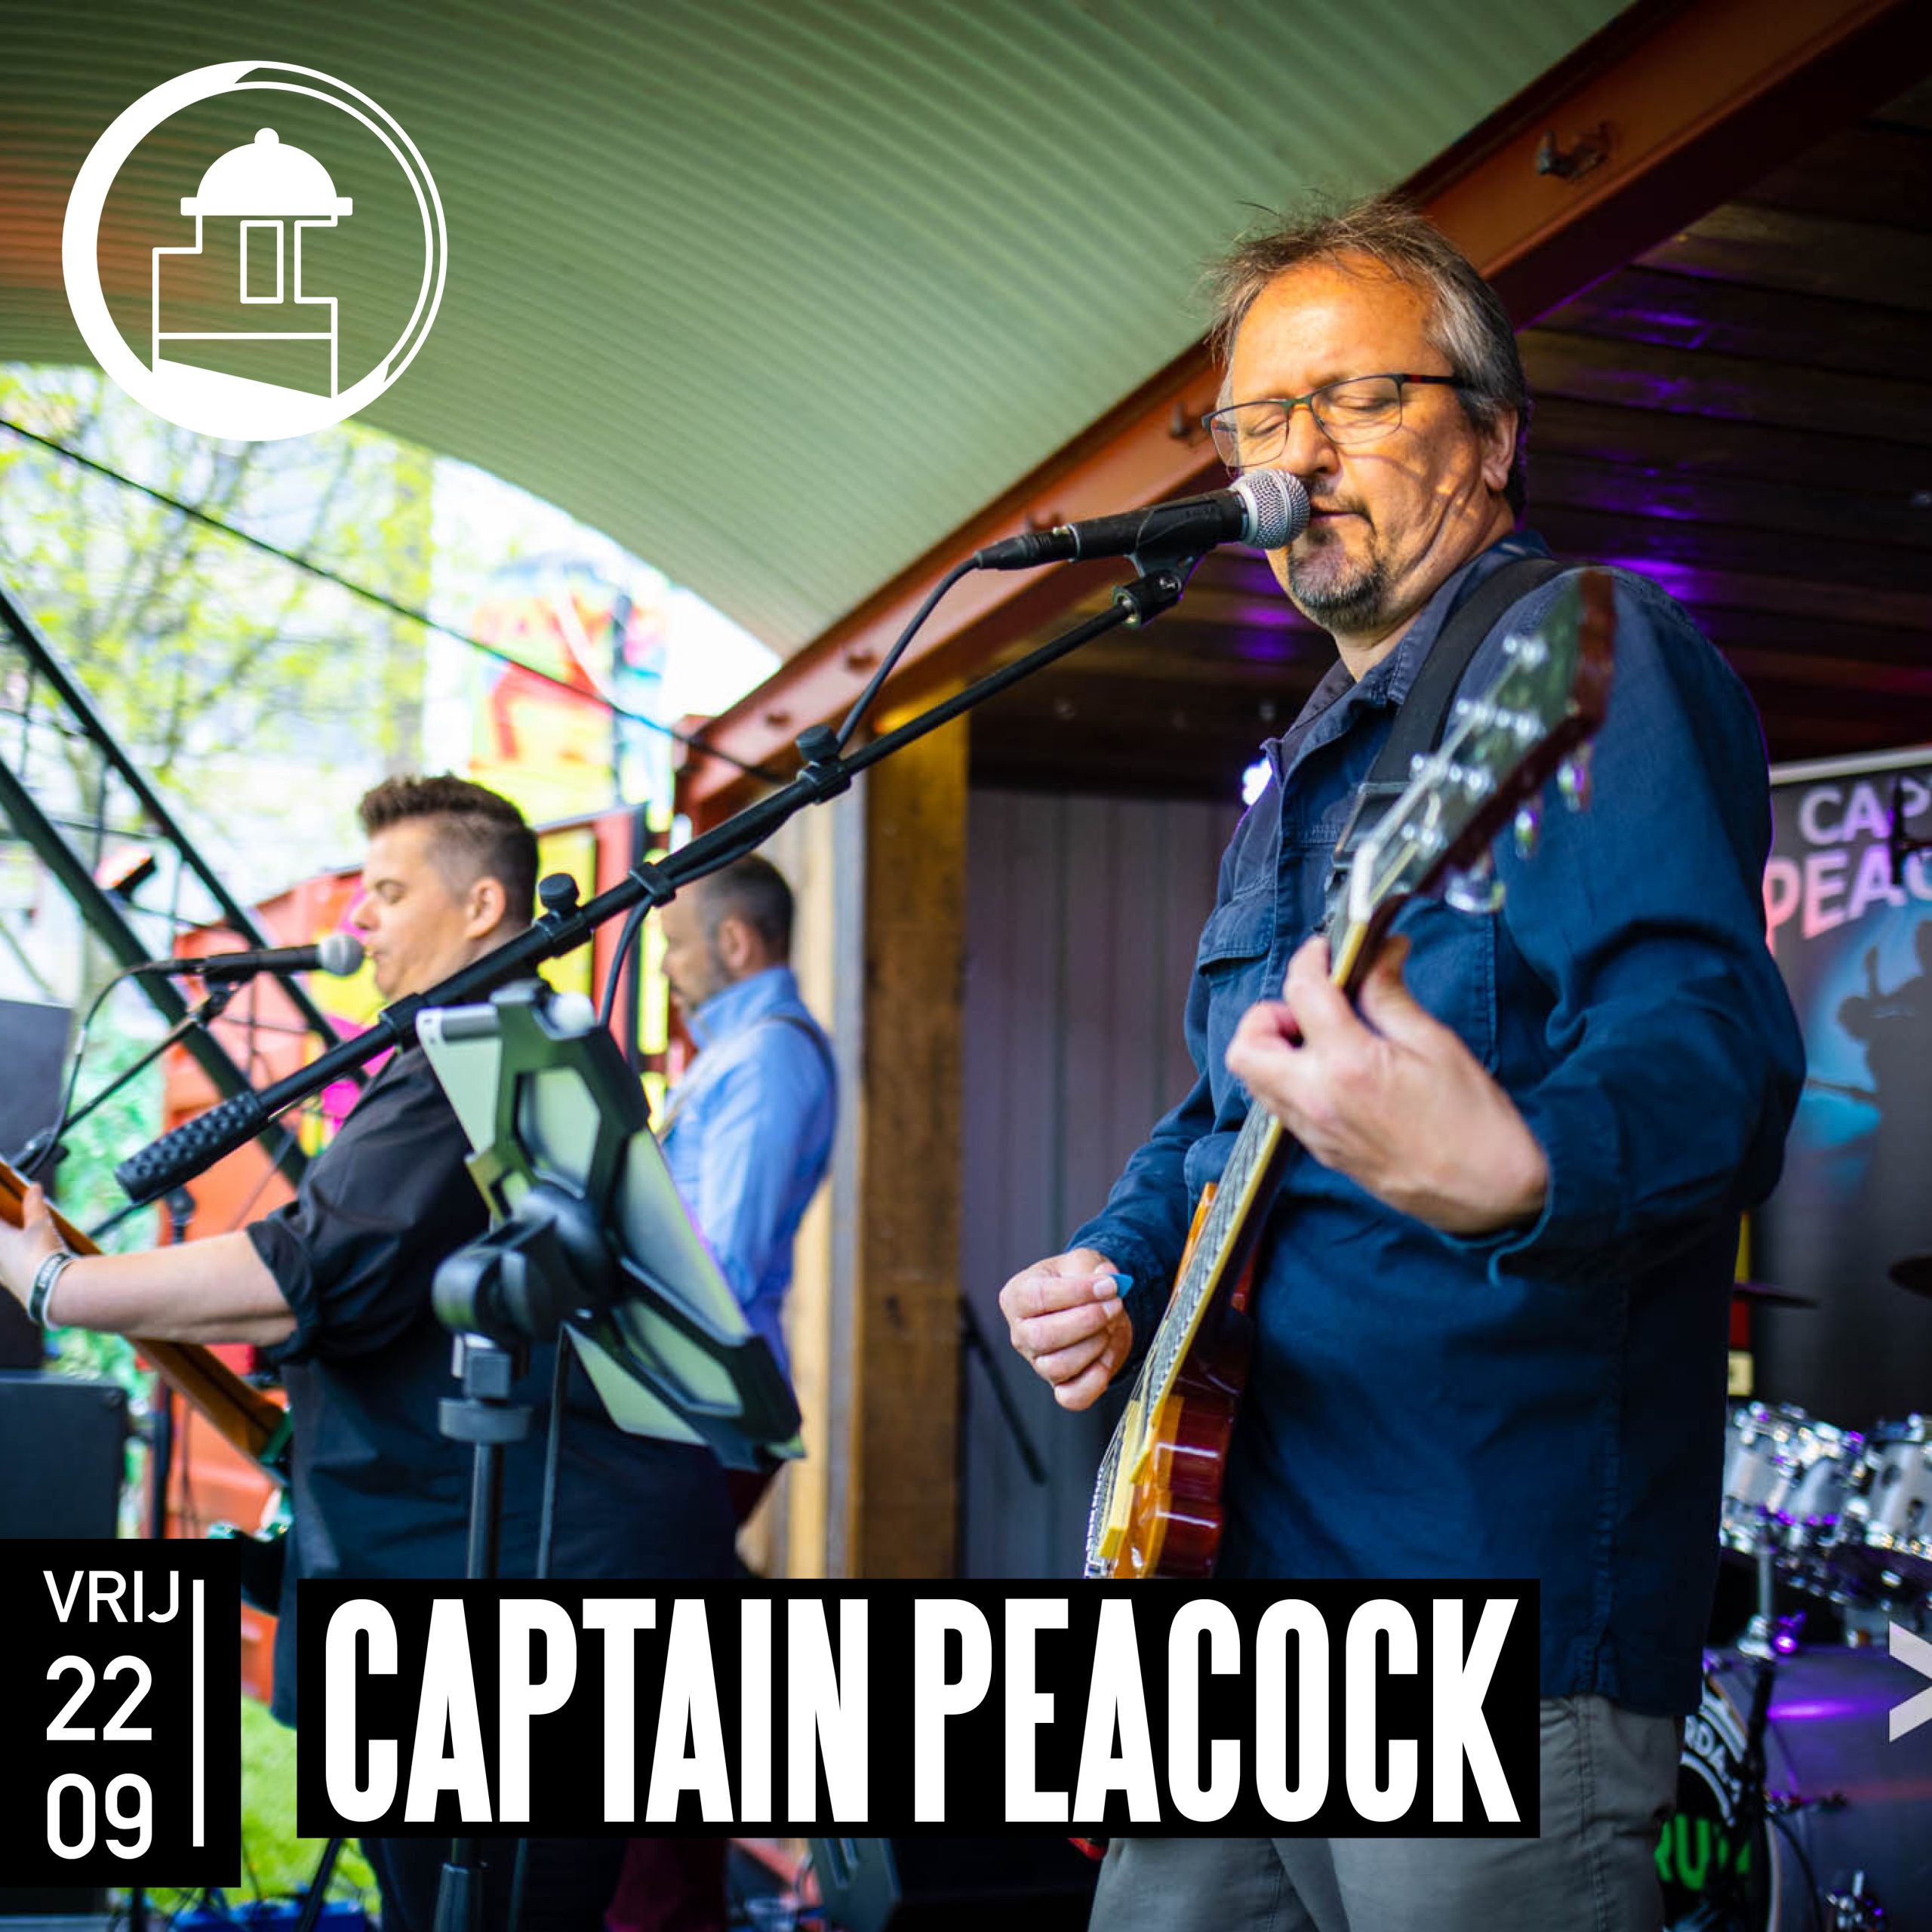 Vrijdag 22 september - Captain Peacock